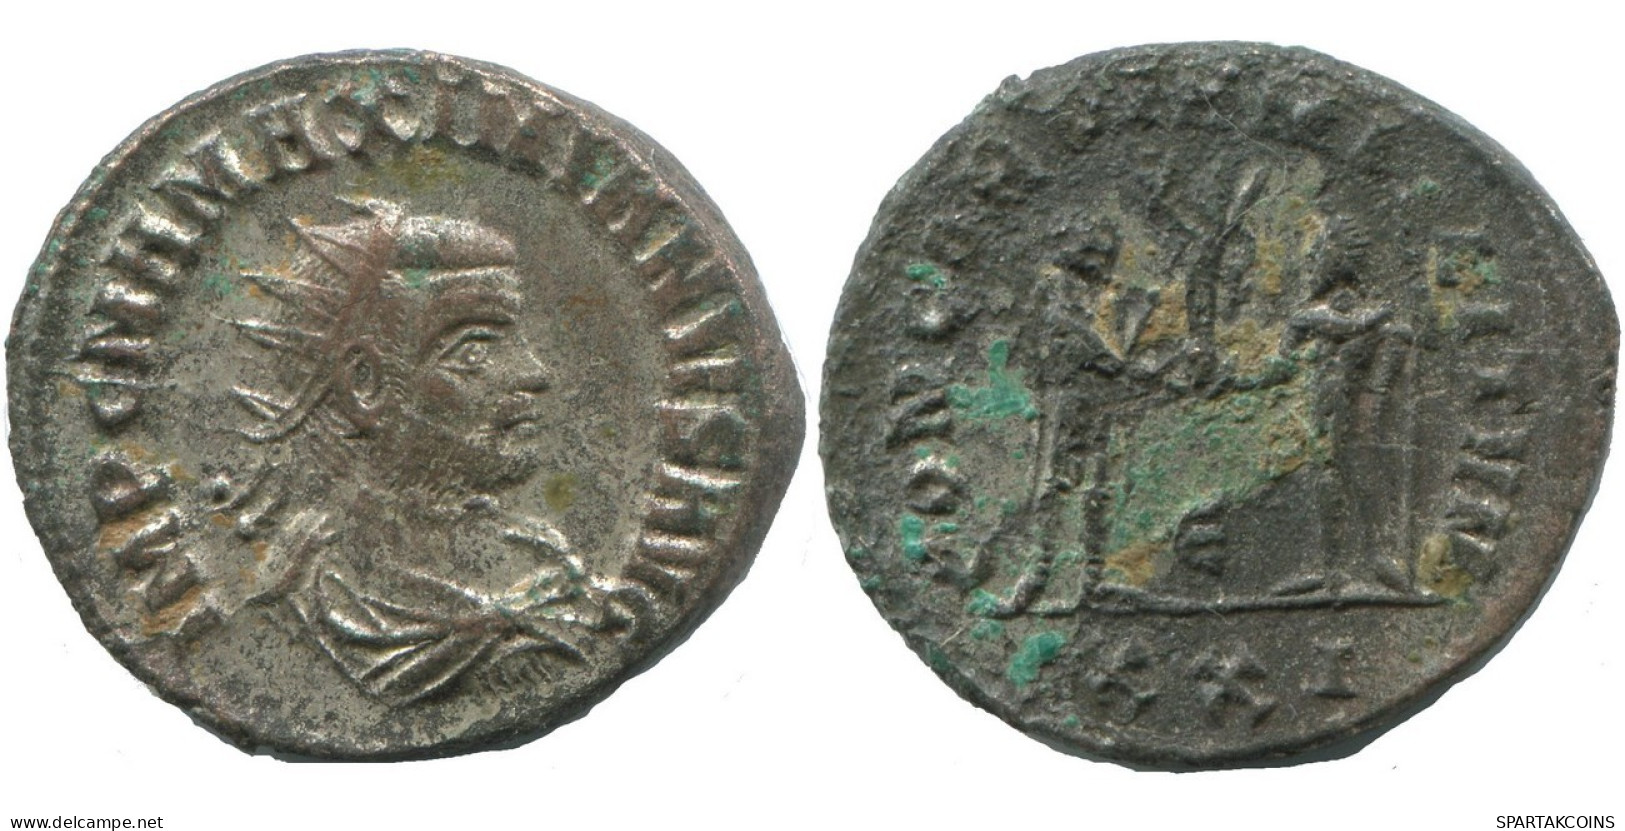 MAXIMIANUS CYZICUS E XXI AD293 SILVERED LATE ROMAN COIN 4.1g/22mm #ANT2671.41.U.A - Die Tetrarchie Und Konstantin Der Große (284 / 307)